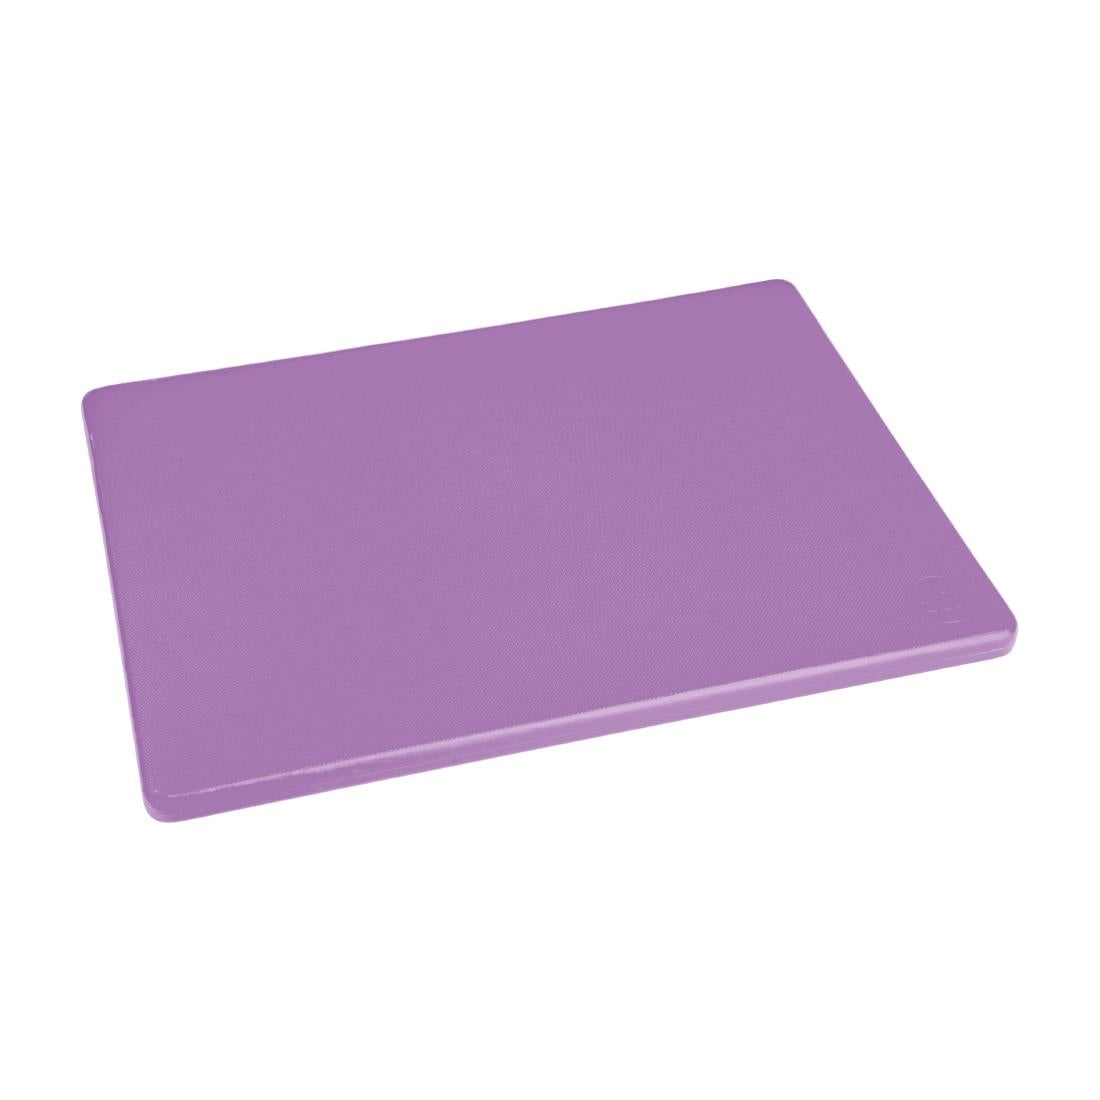 FX106 Hygiplas Low Density Chopping Board Small Purple - 229x305x12mm JD Catering Equipment Solutions Ltd